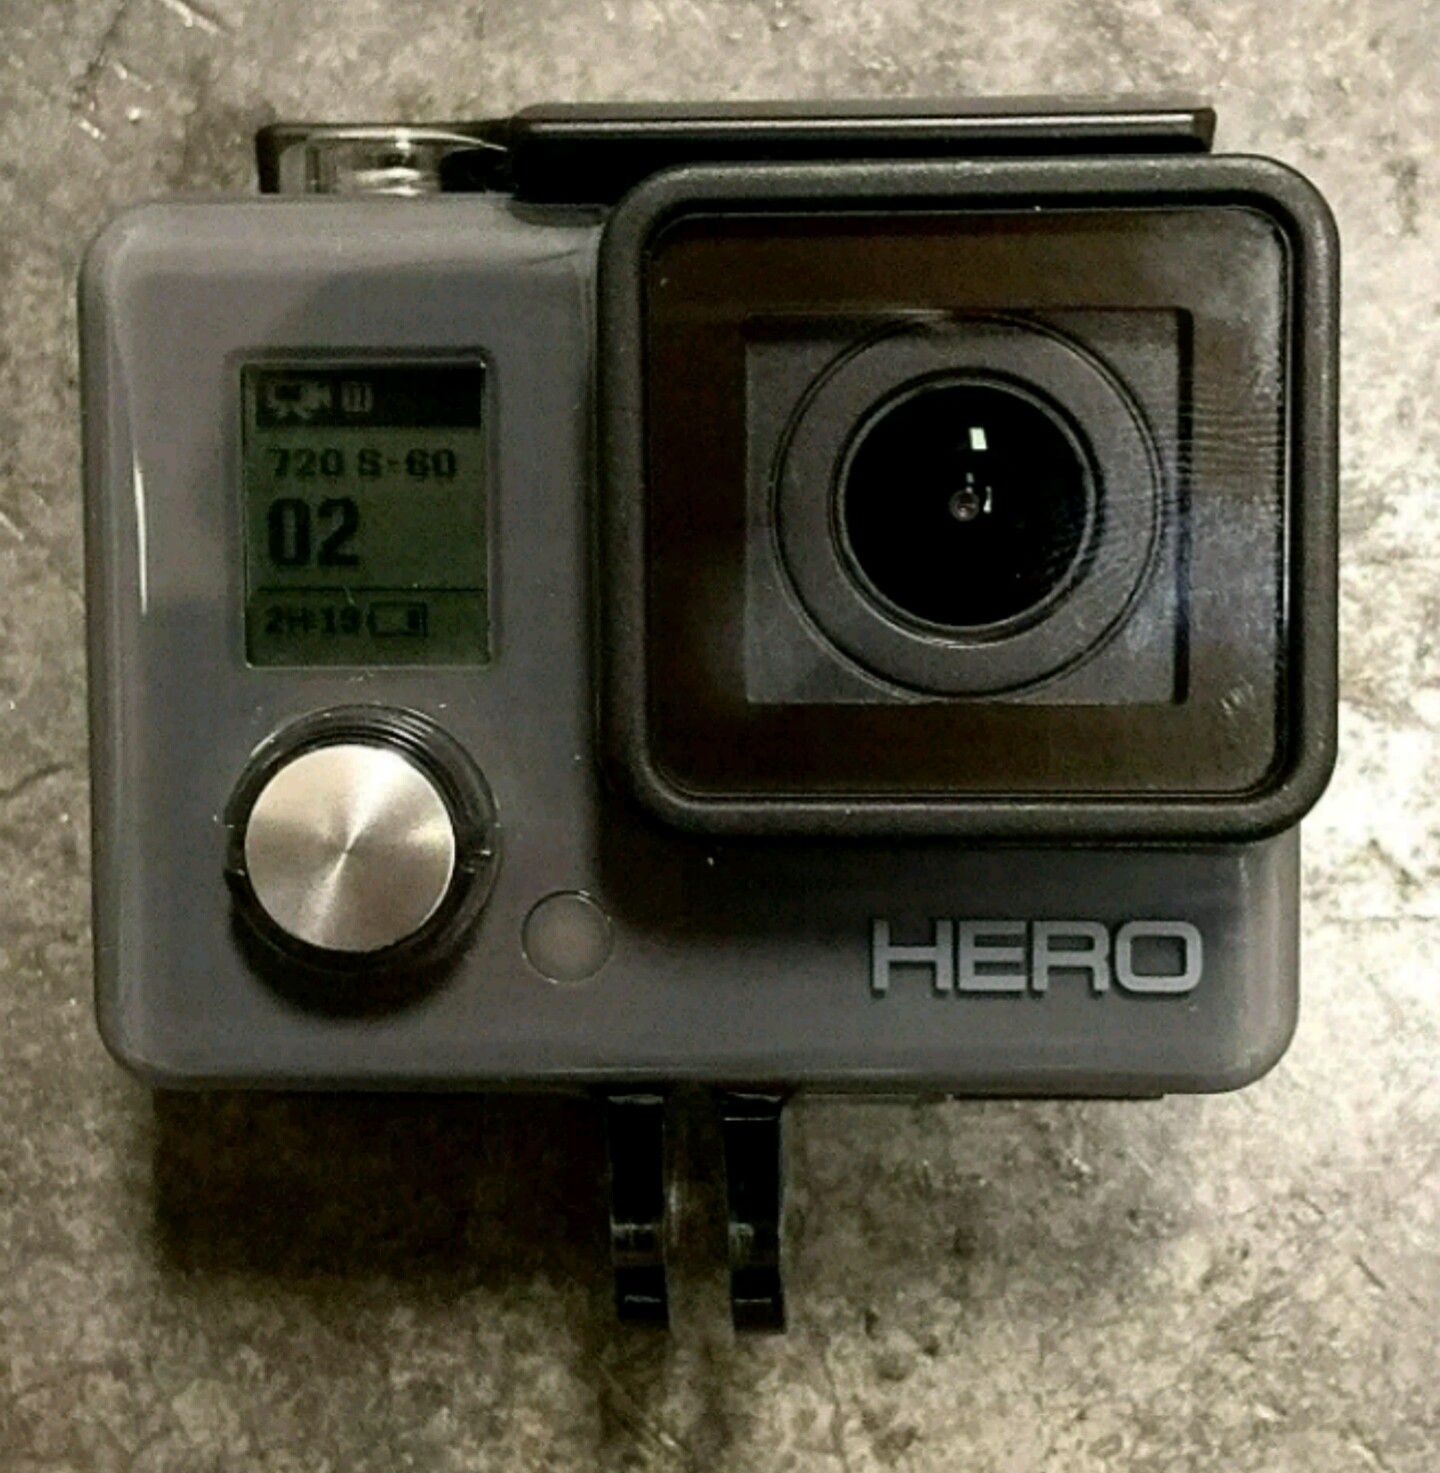 Gopro hero waterproof camera